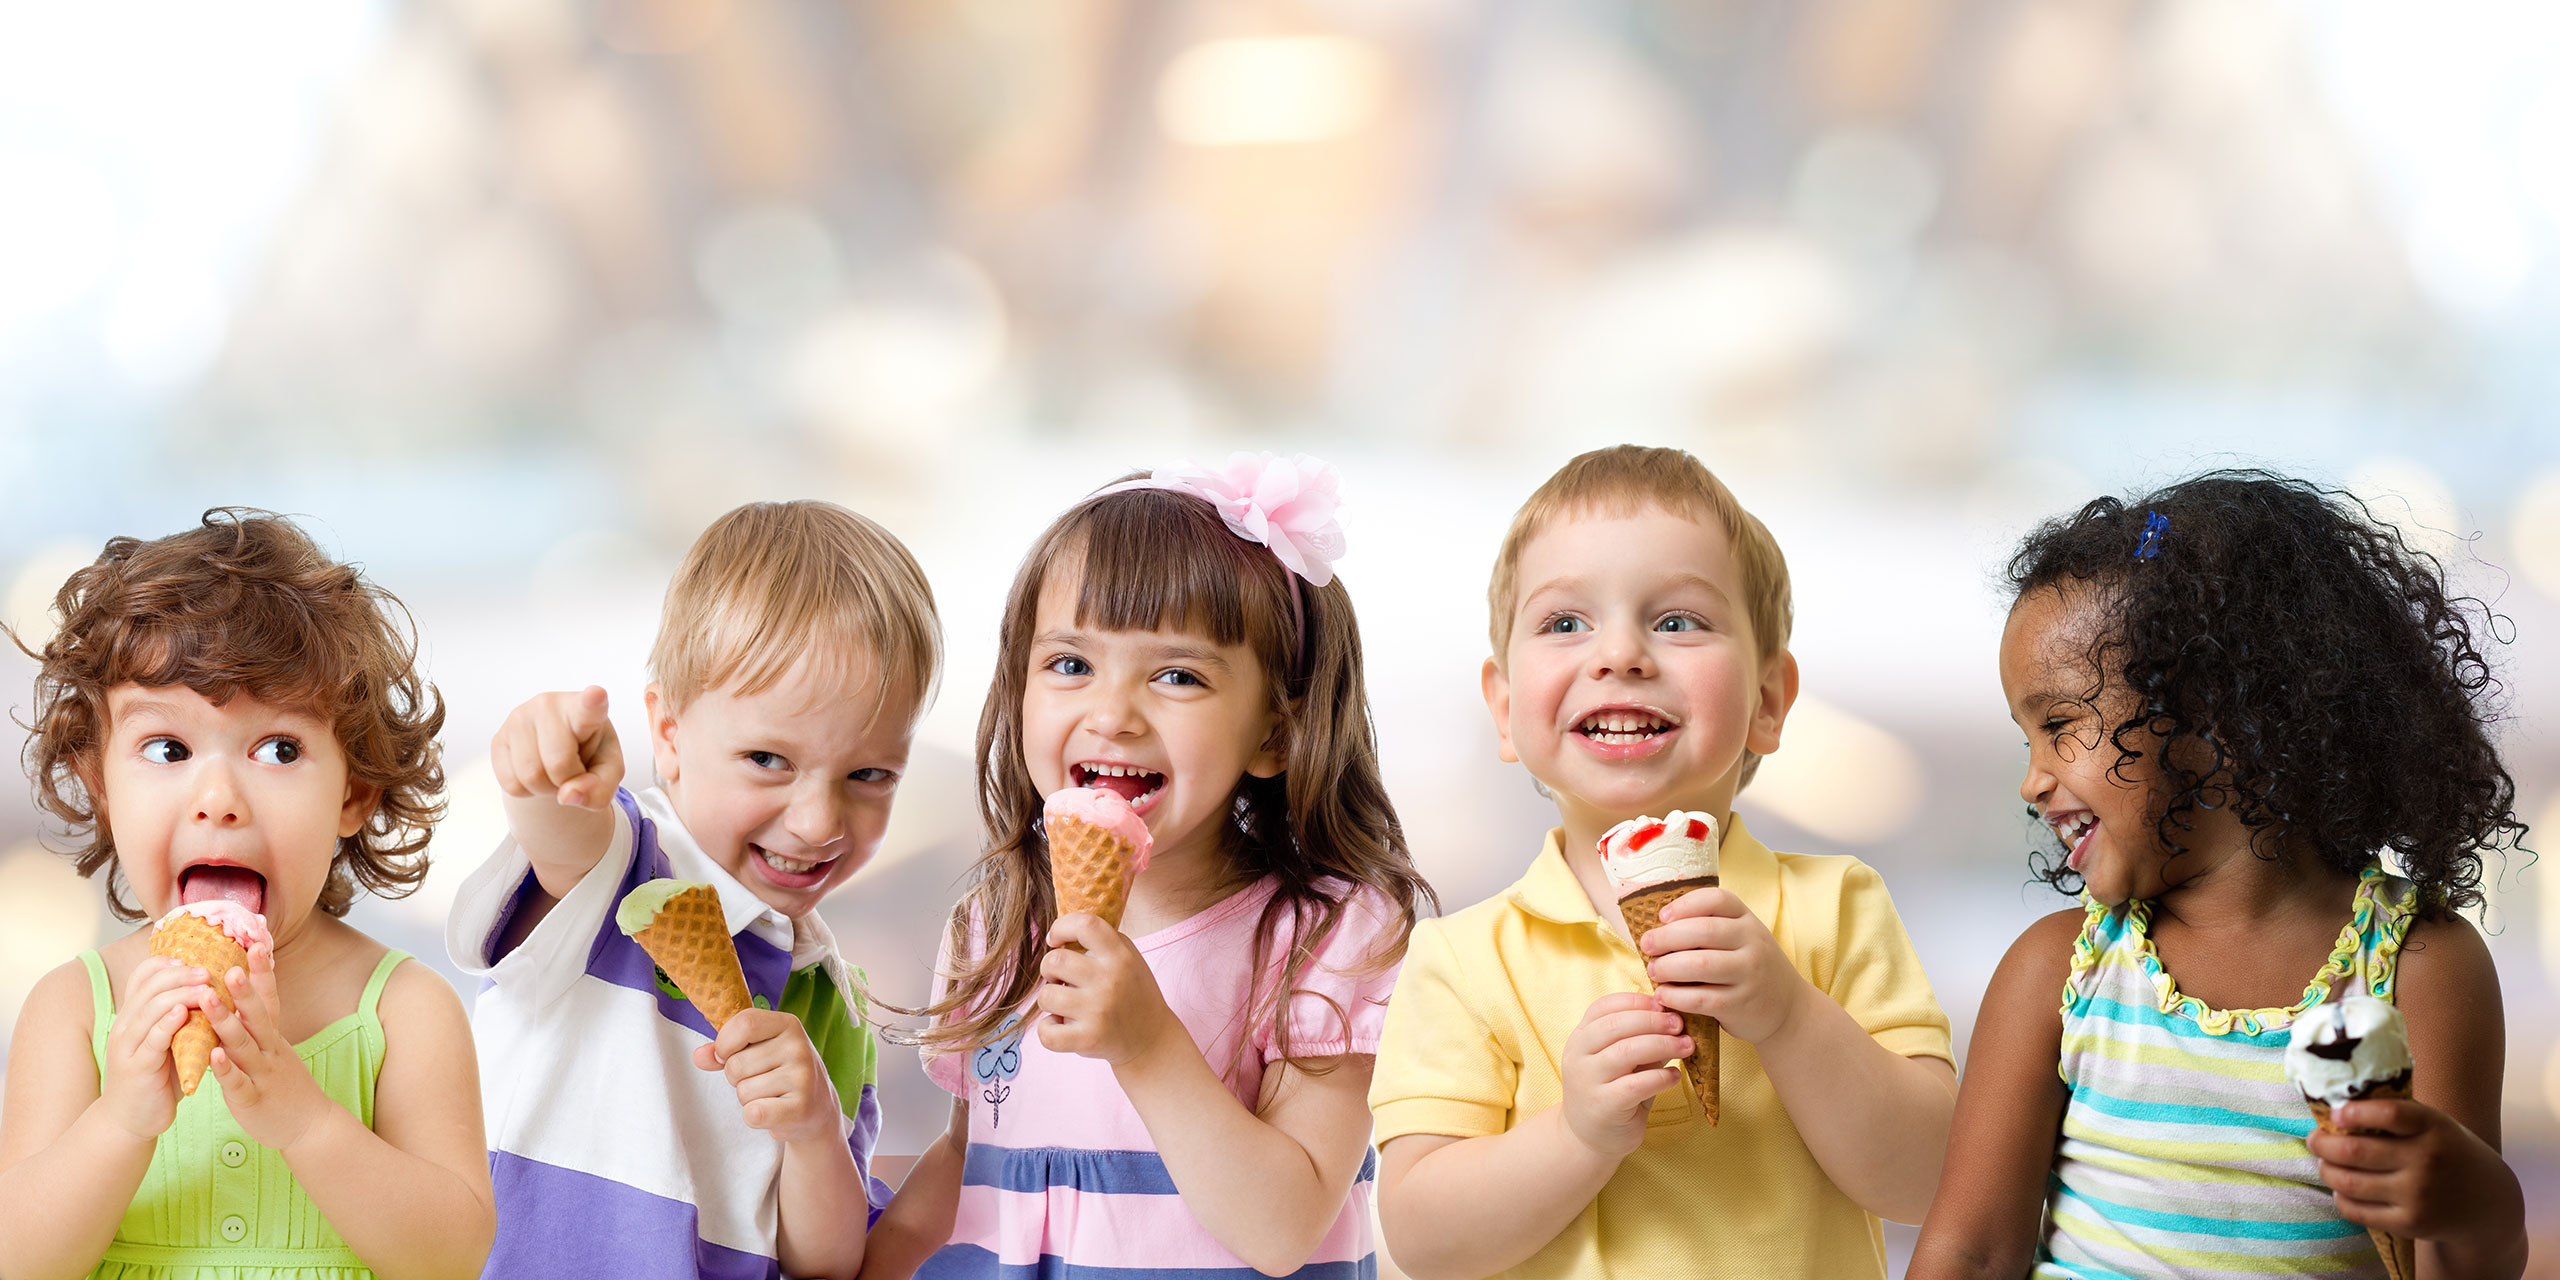 Kids Eating Ice Cream; Courtesy of Andrey_Kuzmin/Shutterstock.com